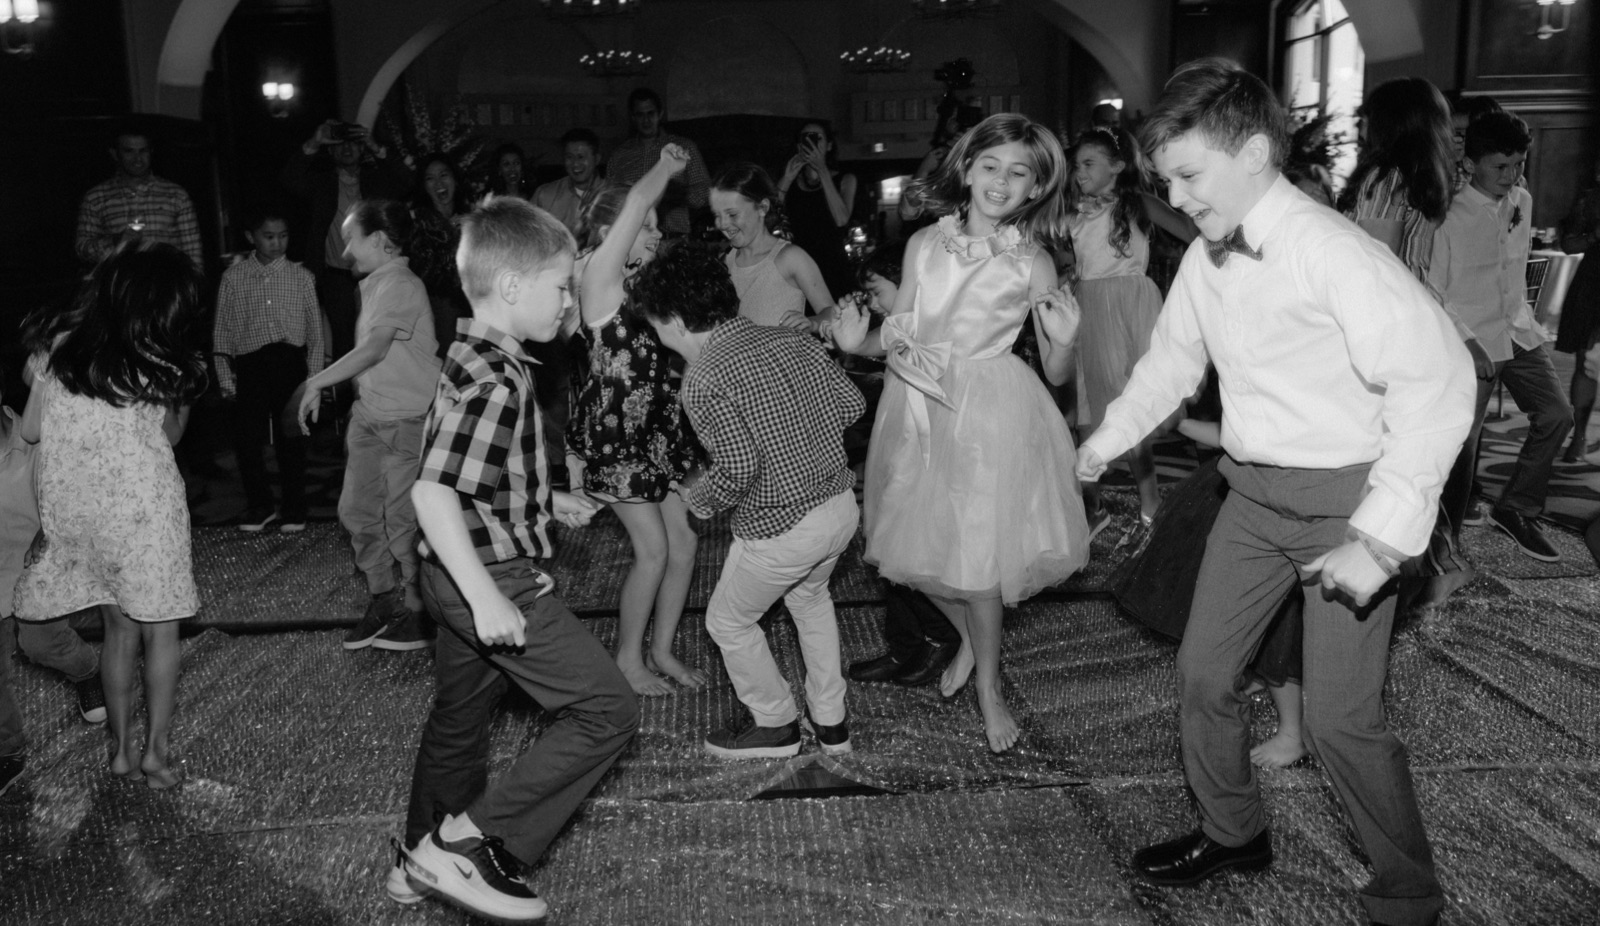 Bubble wrap dance floor at wedding in Victoria Ballroom